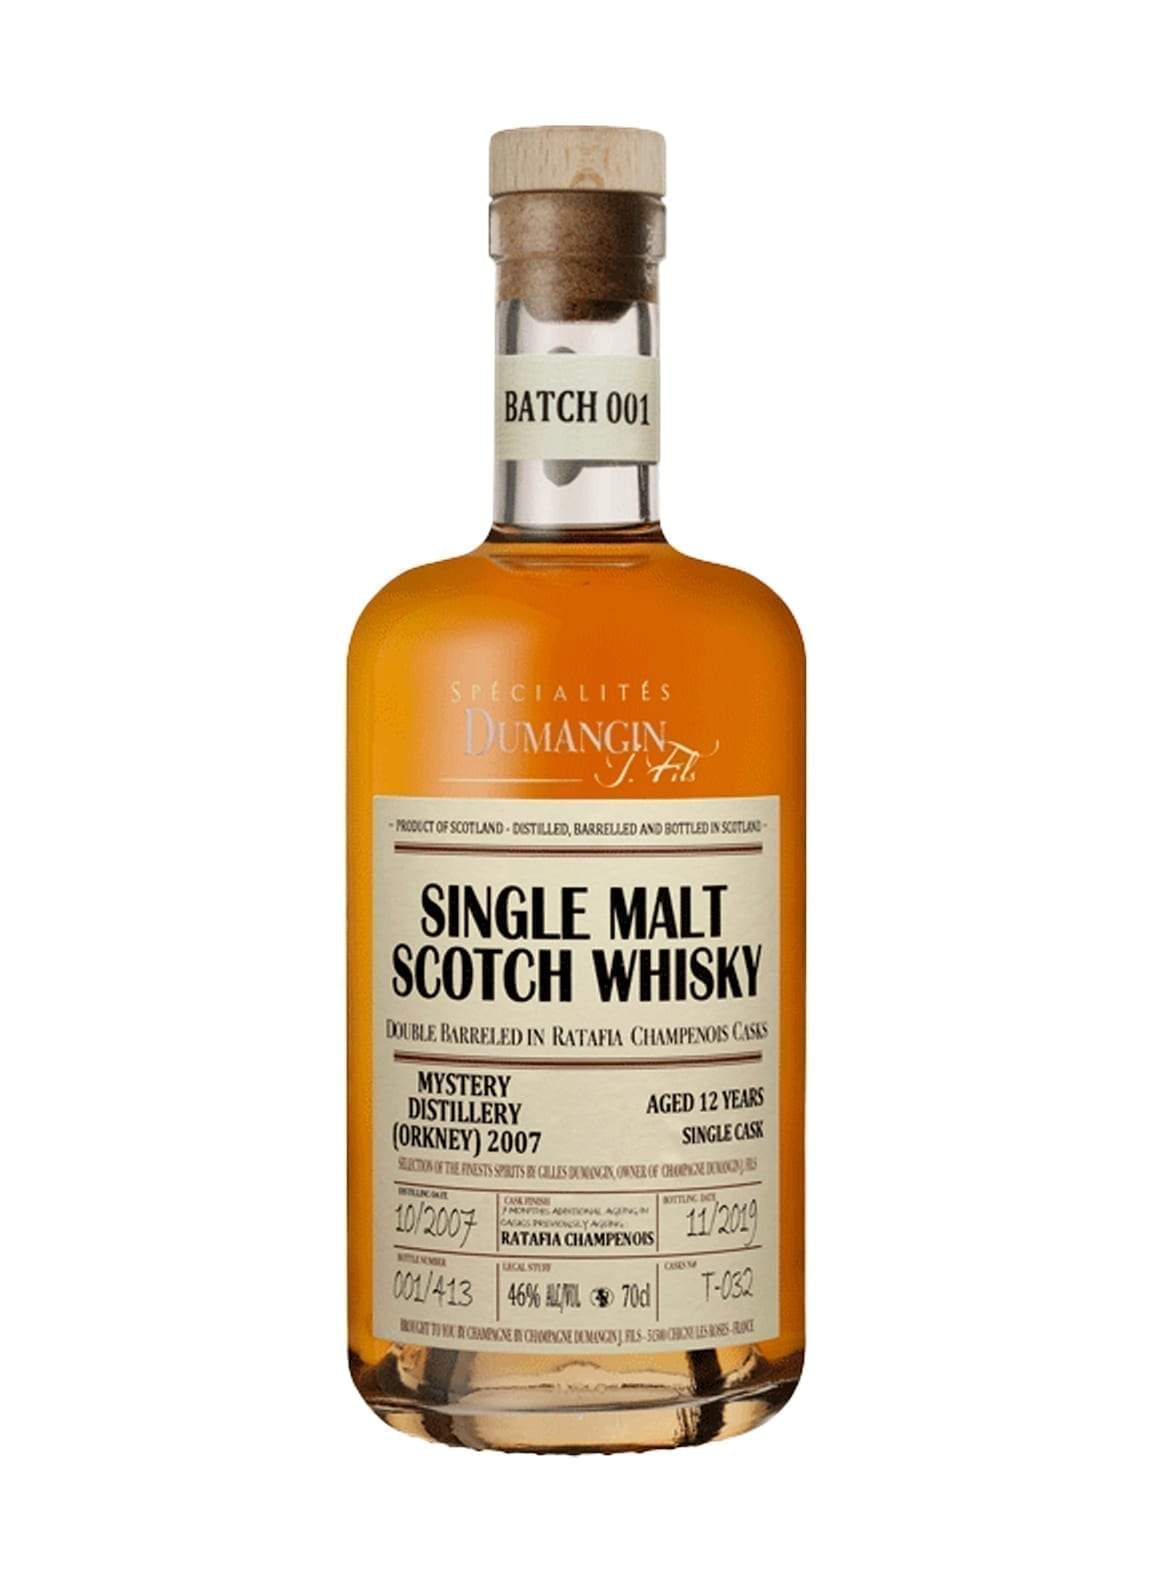 Dumangin Batch 001 Single Malt Scotch Whisky 46% 700ml | Whiskey | Shop online at Spirits of France